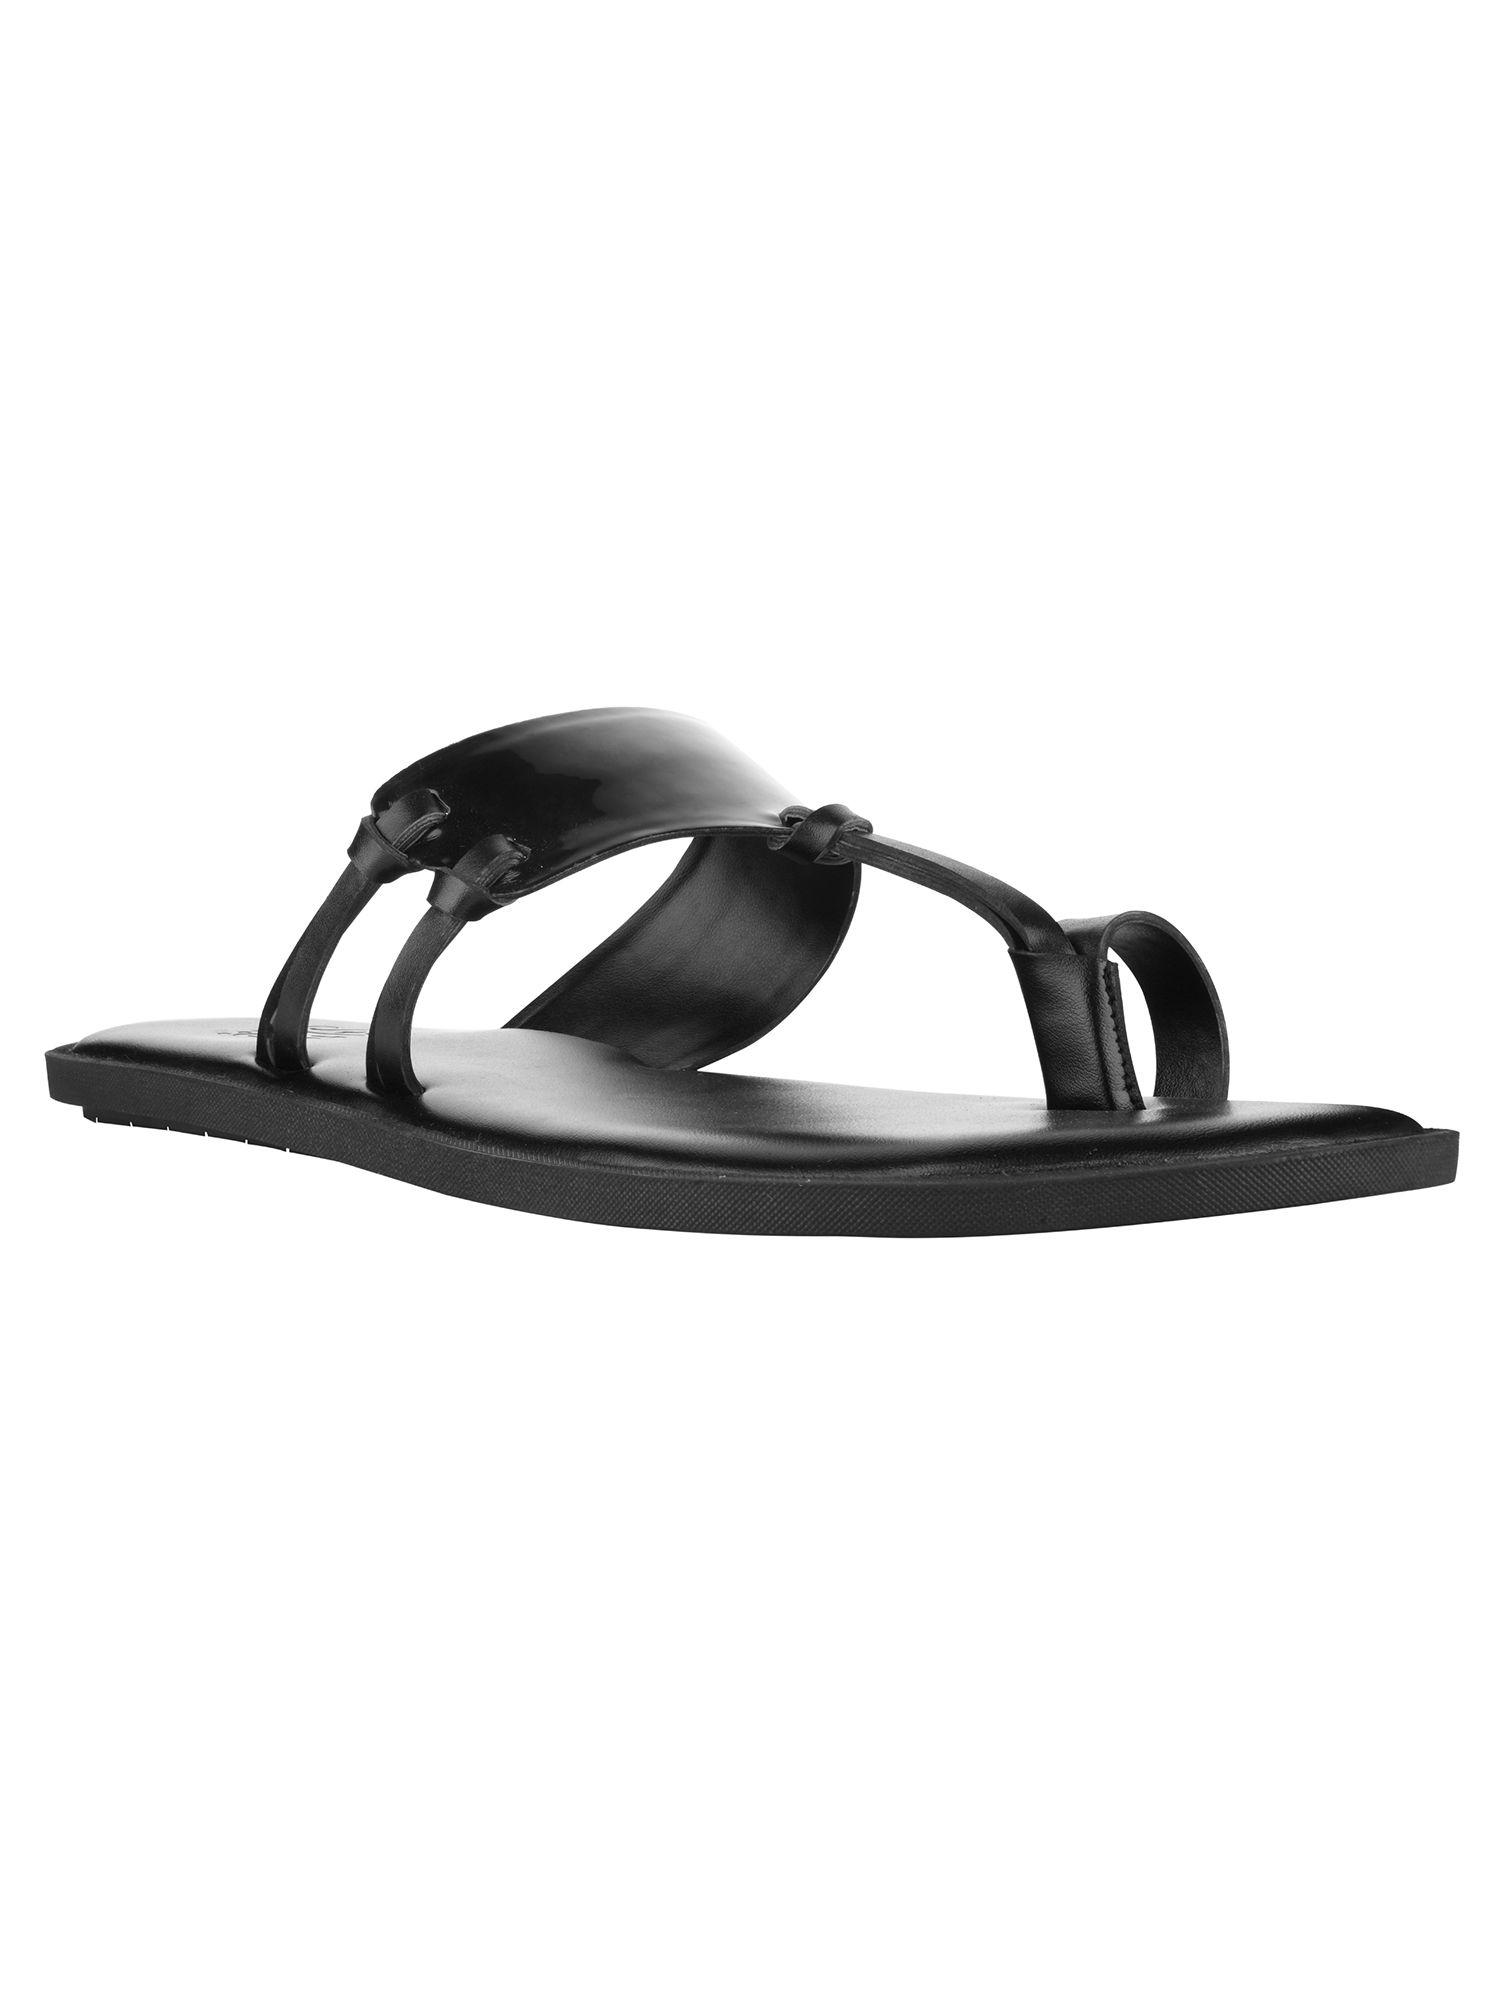 indy-black-patent-sandals-for-men